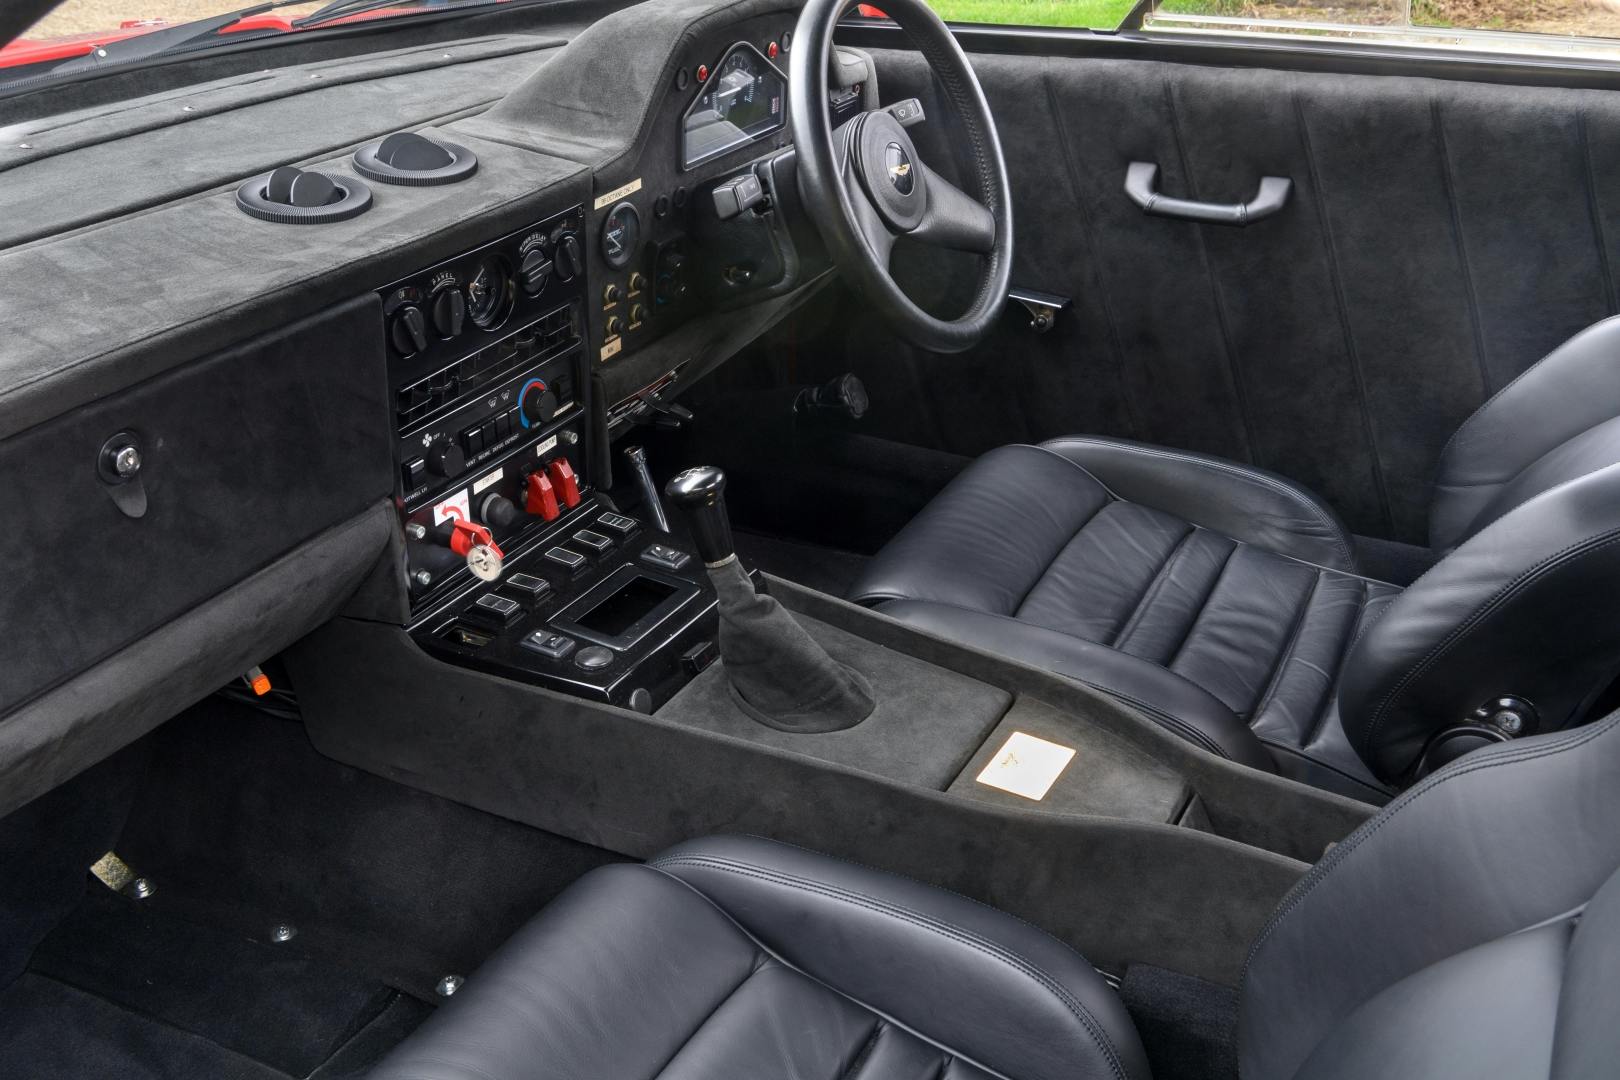 1986 Aston Martin V8 Vantage Zagato Rowan Atkinson Mr Bean interior